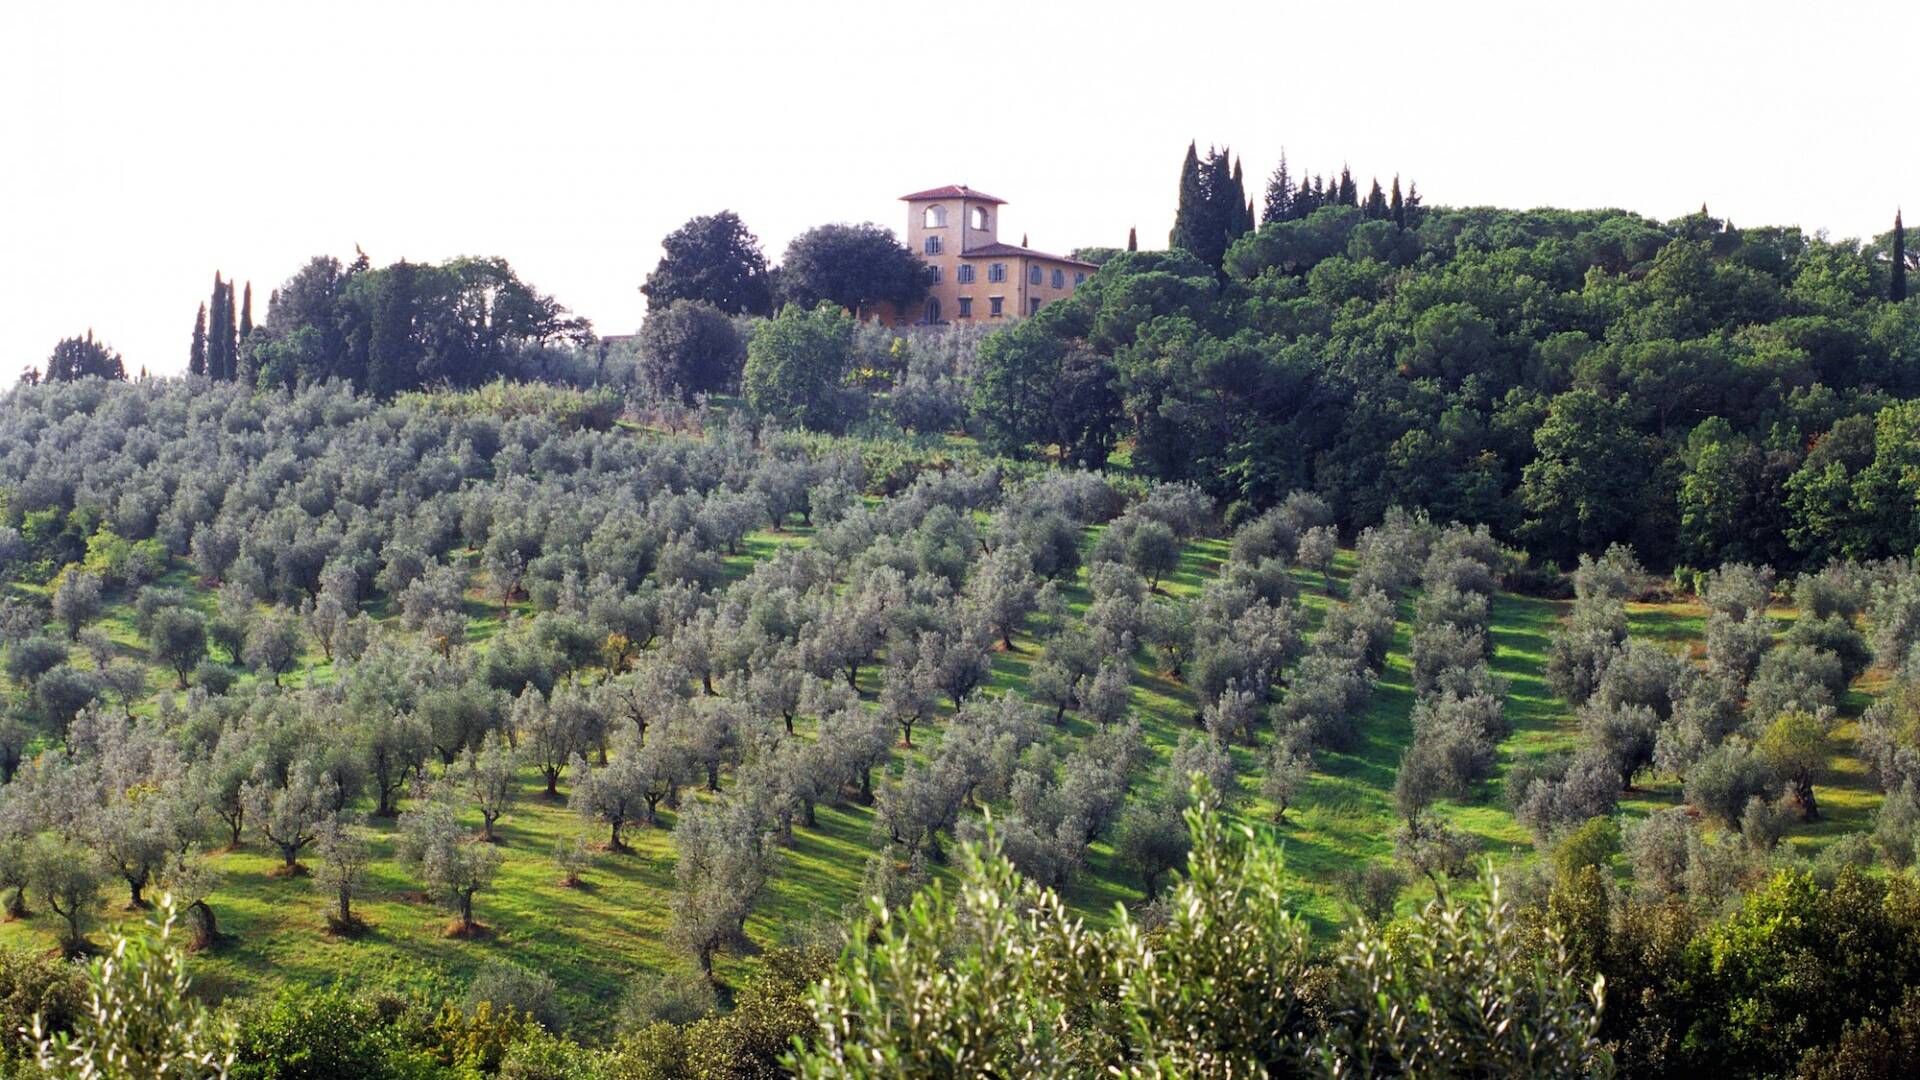 Tuscan hills and vineyards